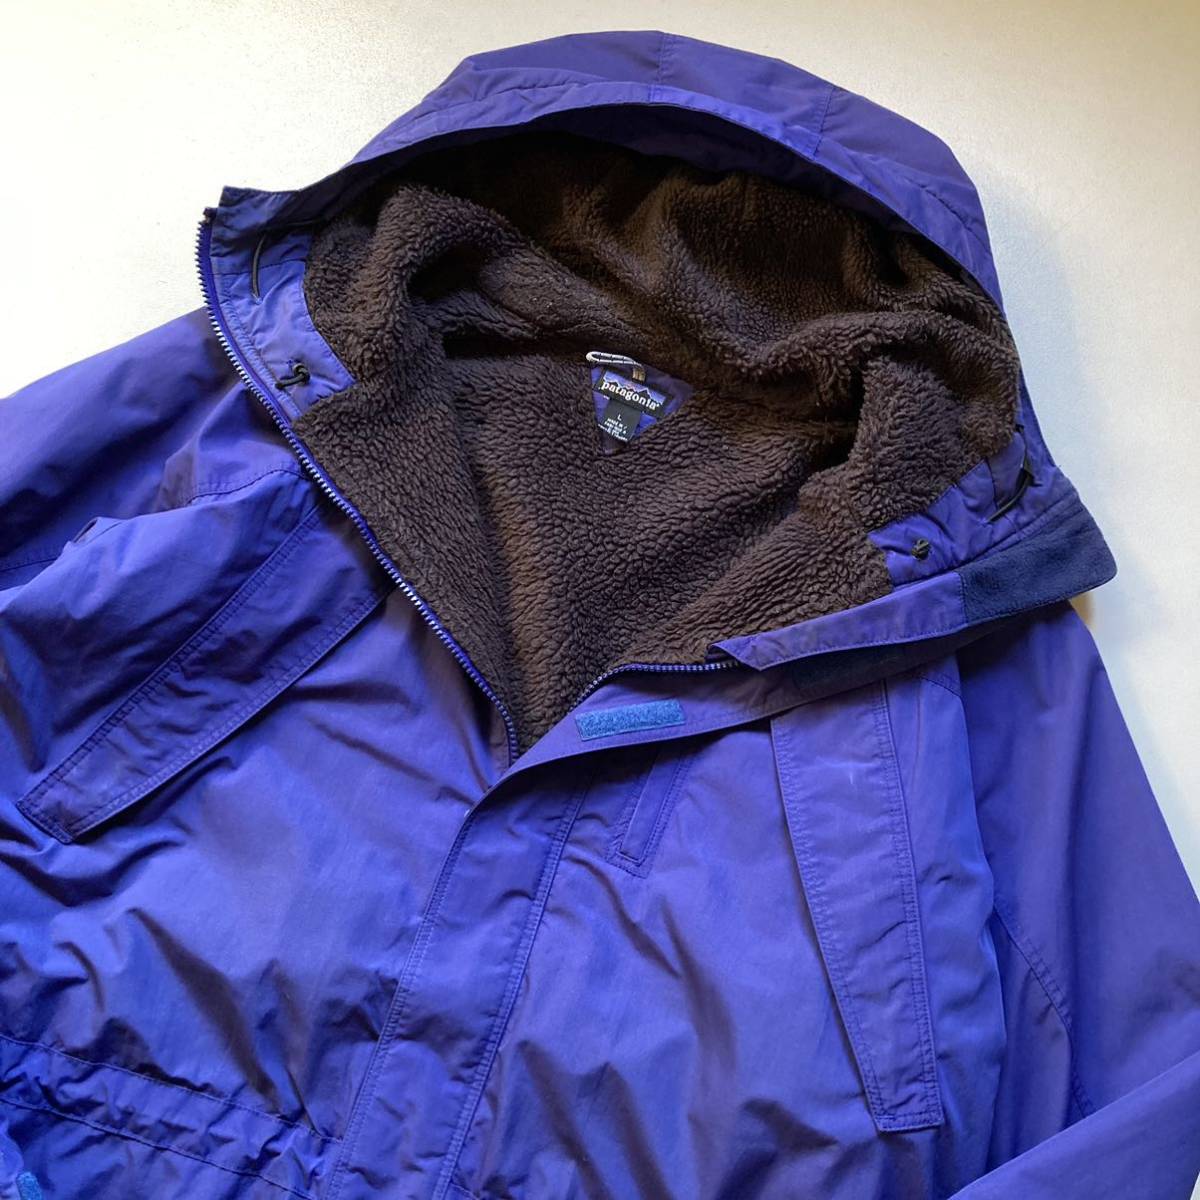 90s Patagonia Infurno jacket “Initial type” 90年代 パタゴニア インファーノジャケット 初期型 1st  type